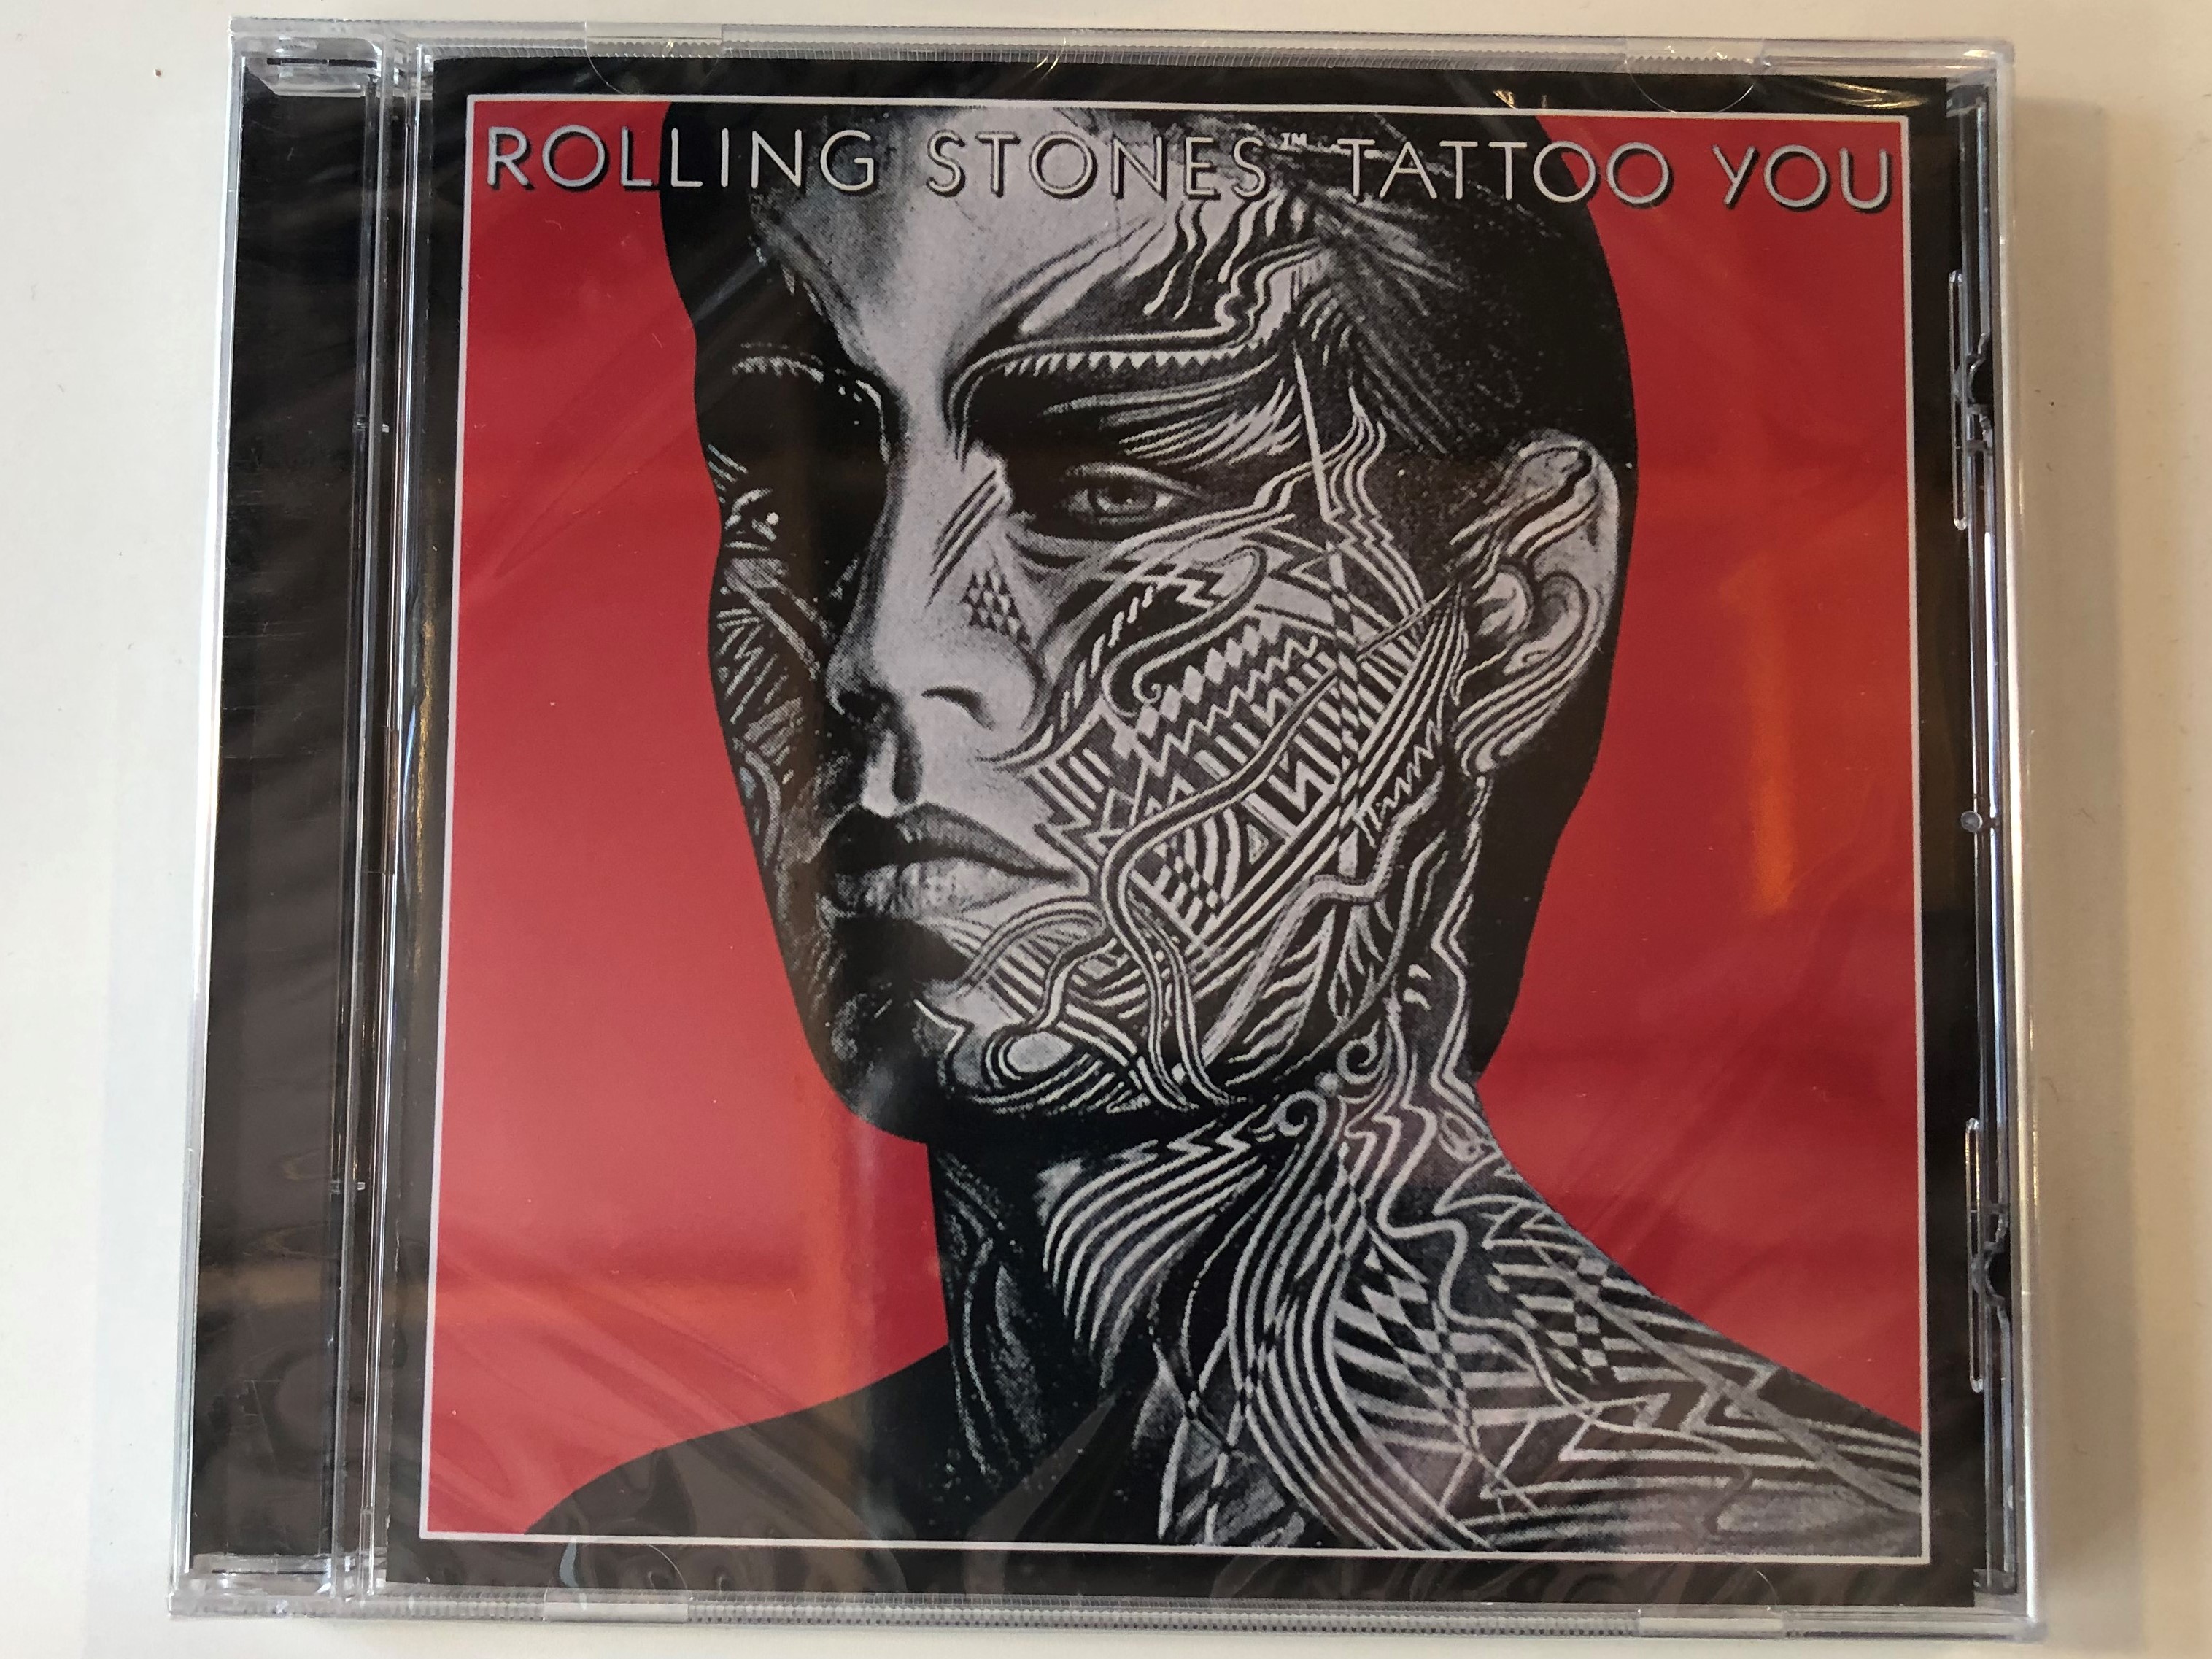 rolling-stones-tattoo-you-polydor-audio-cd-2009-0602527015699-1-.jpg